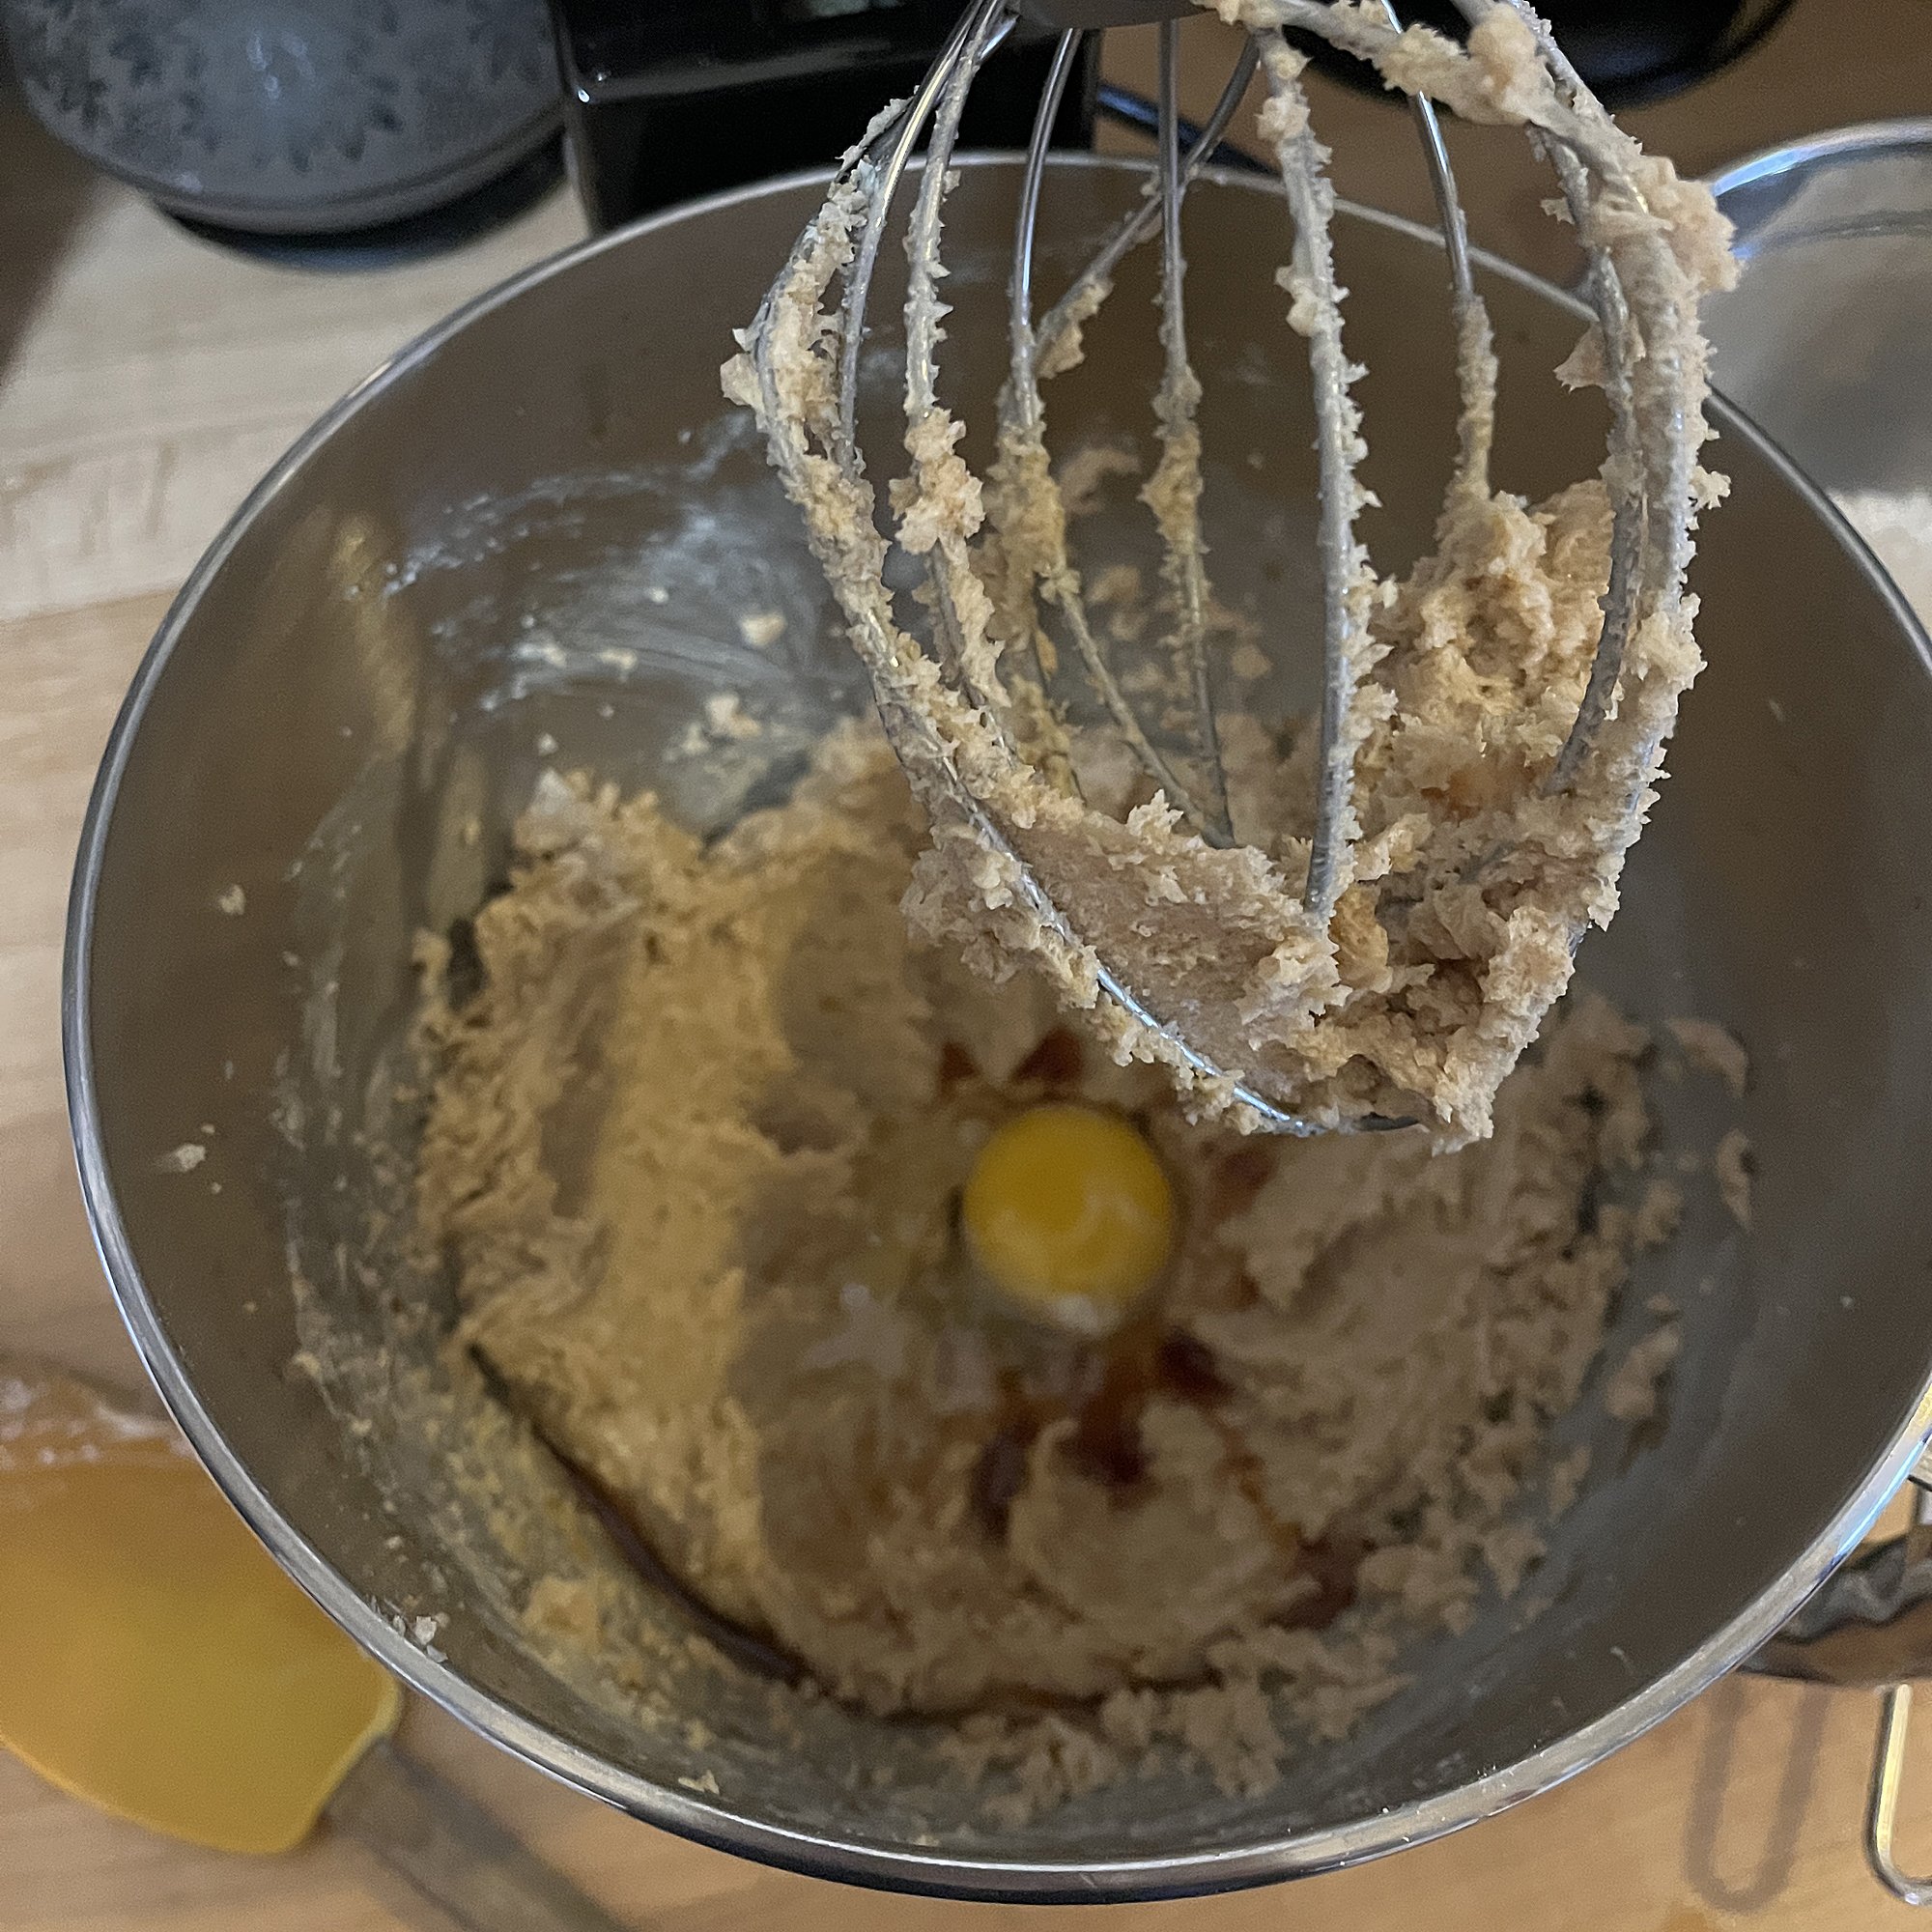 Cream butter &amp; sugar together. Add vanilla &amp; egg.